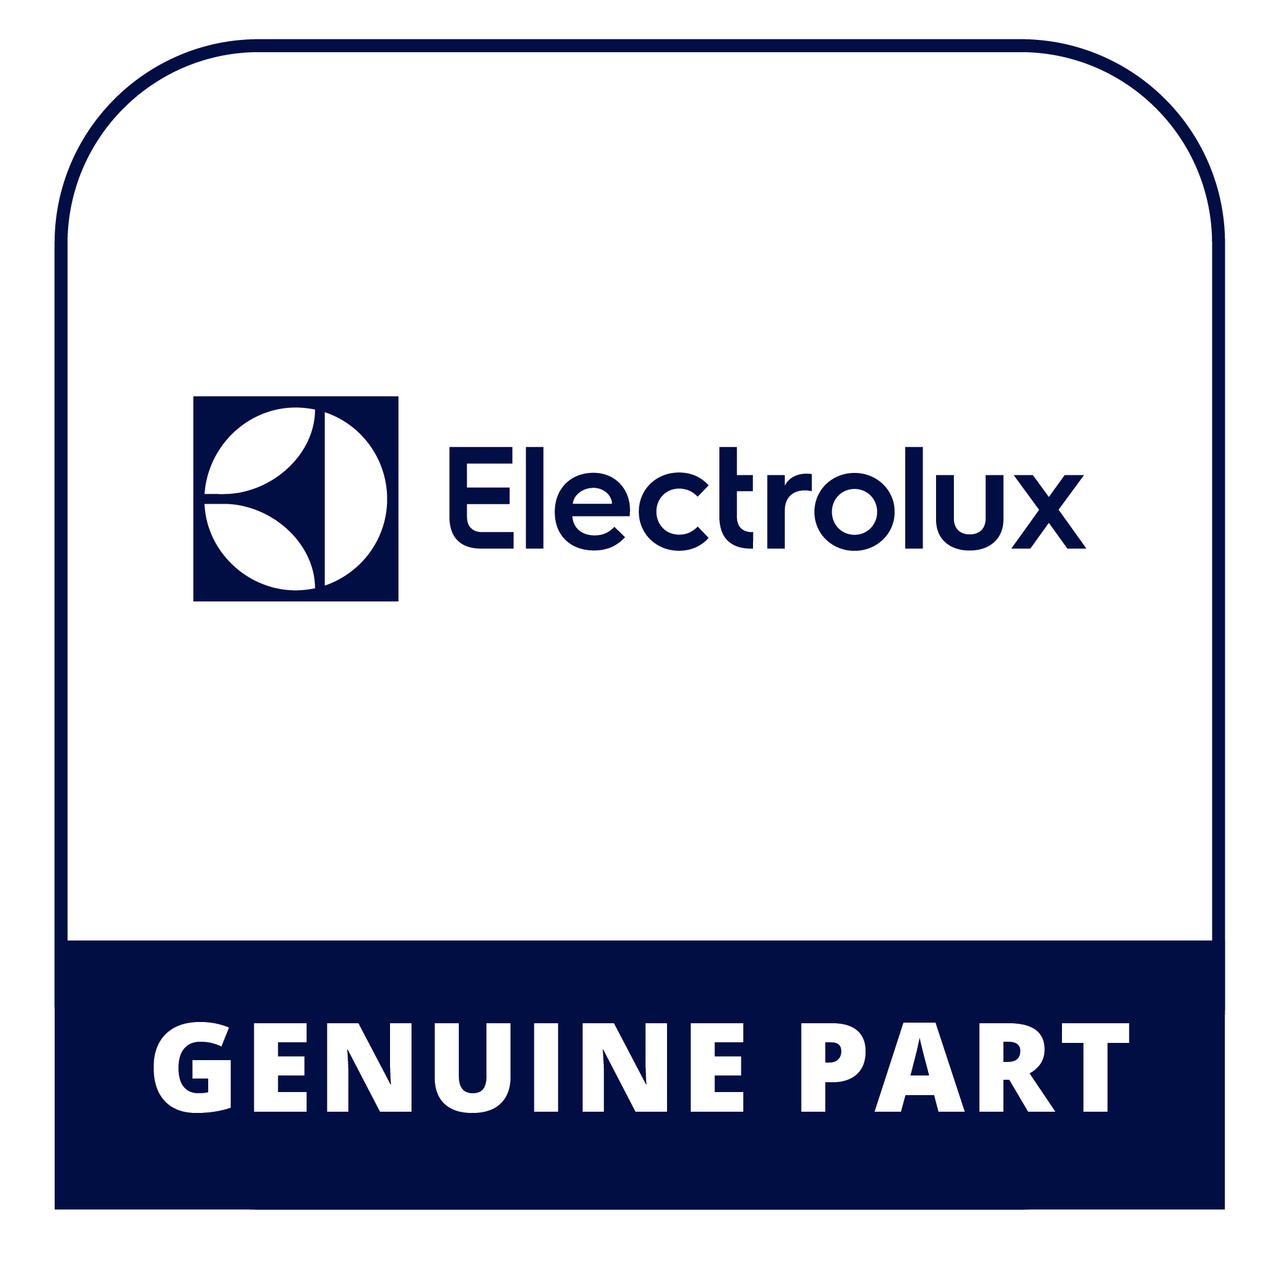 Frigidaire - Electrolux 5304498788 Ignitor/Orifice Ass - Genuine Electrolux Part